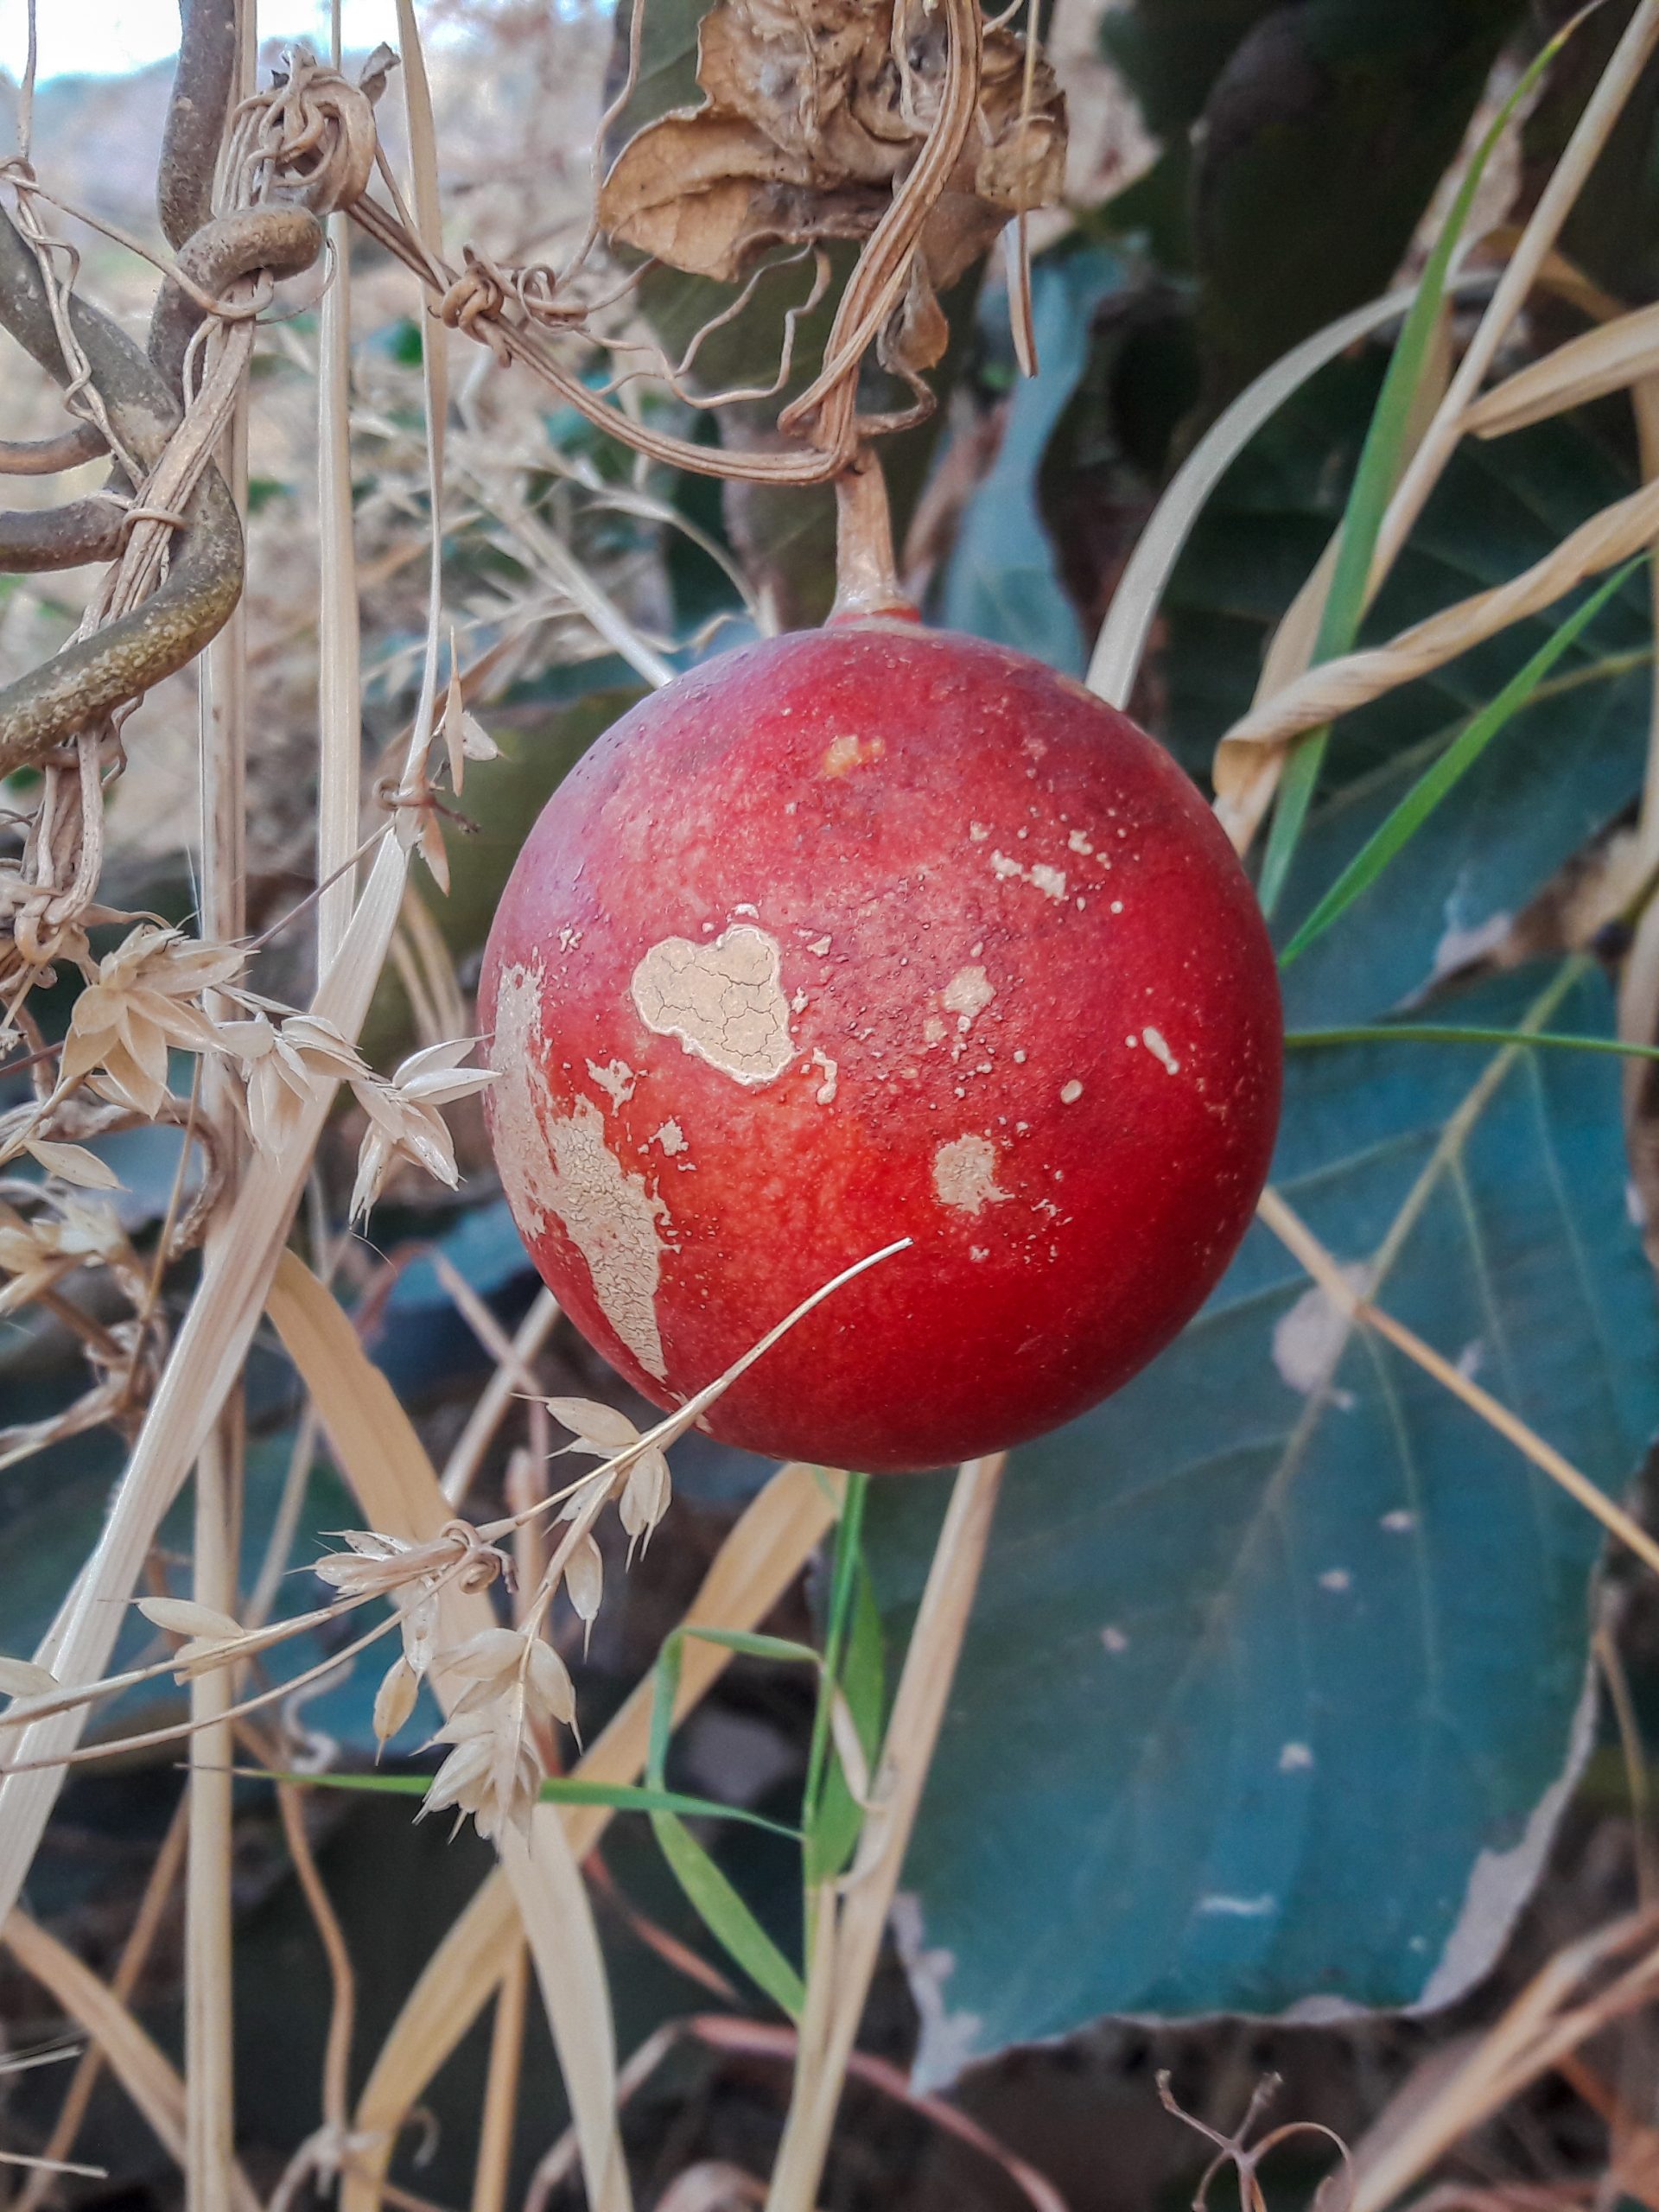 Wild red fruit